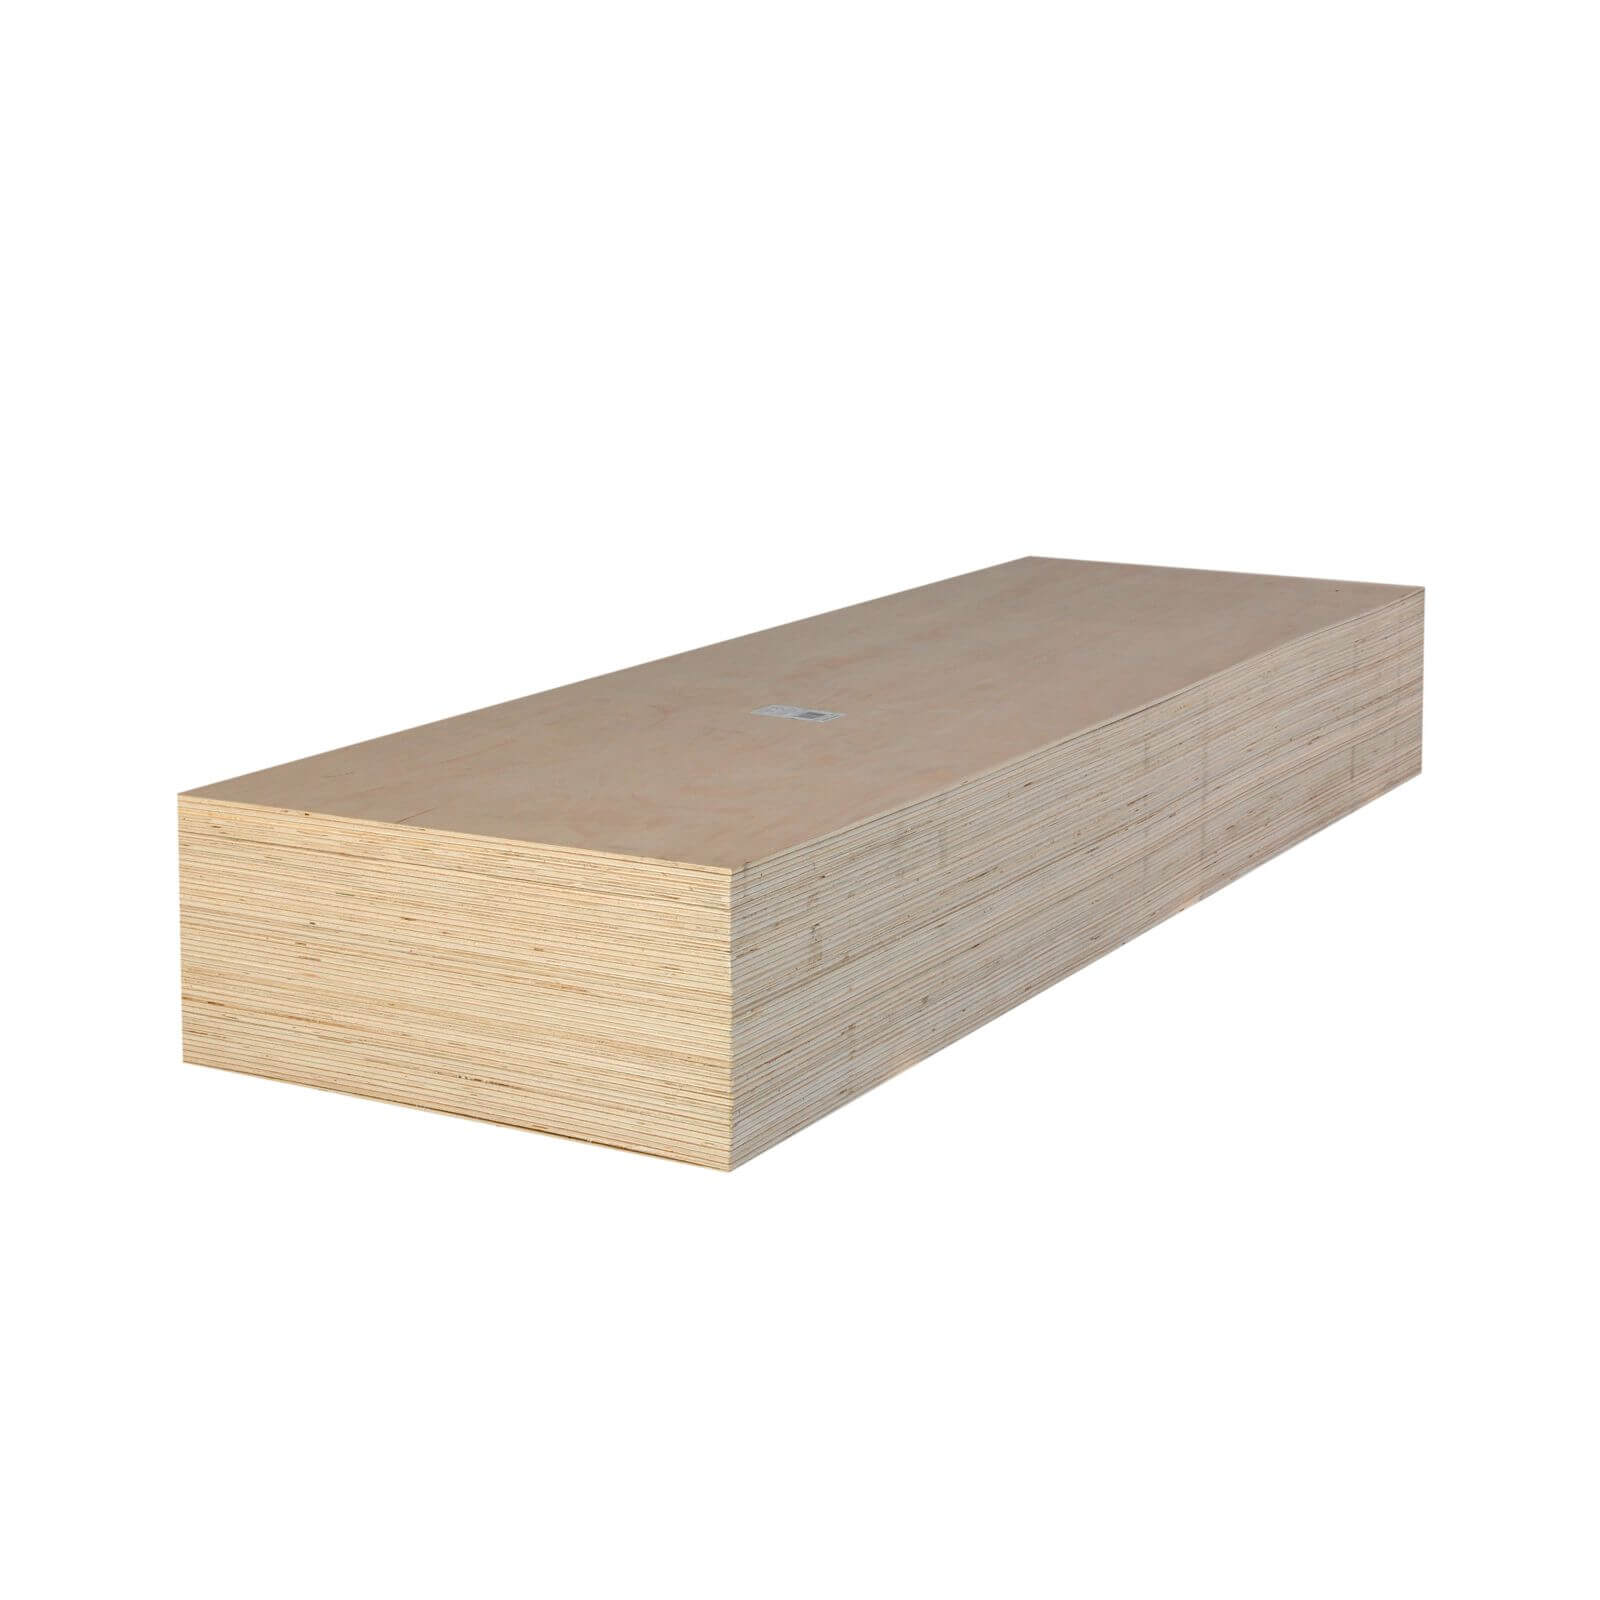 Metsa Hardwood Plywood Board 1.8m (1829 x 607 x 5.5mm)